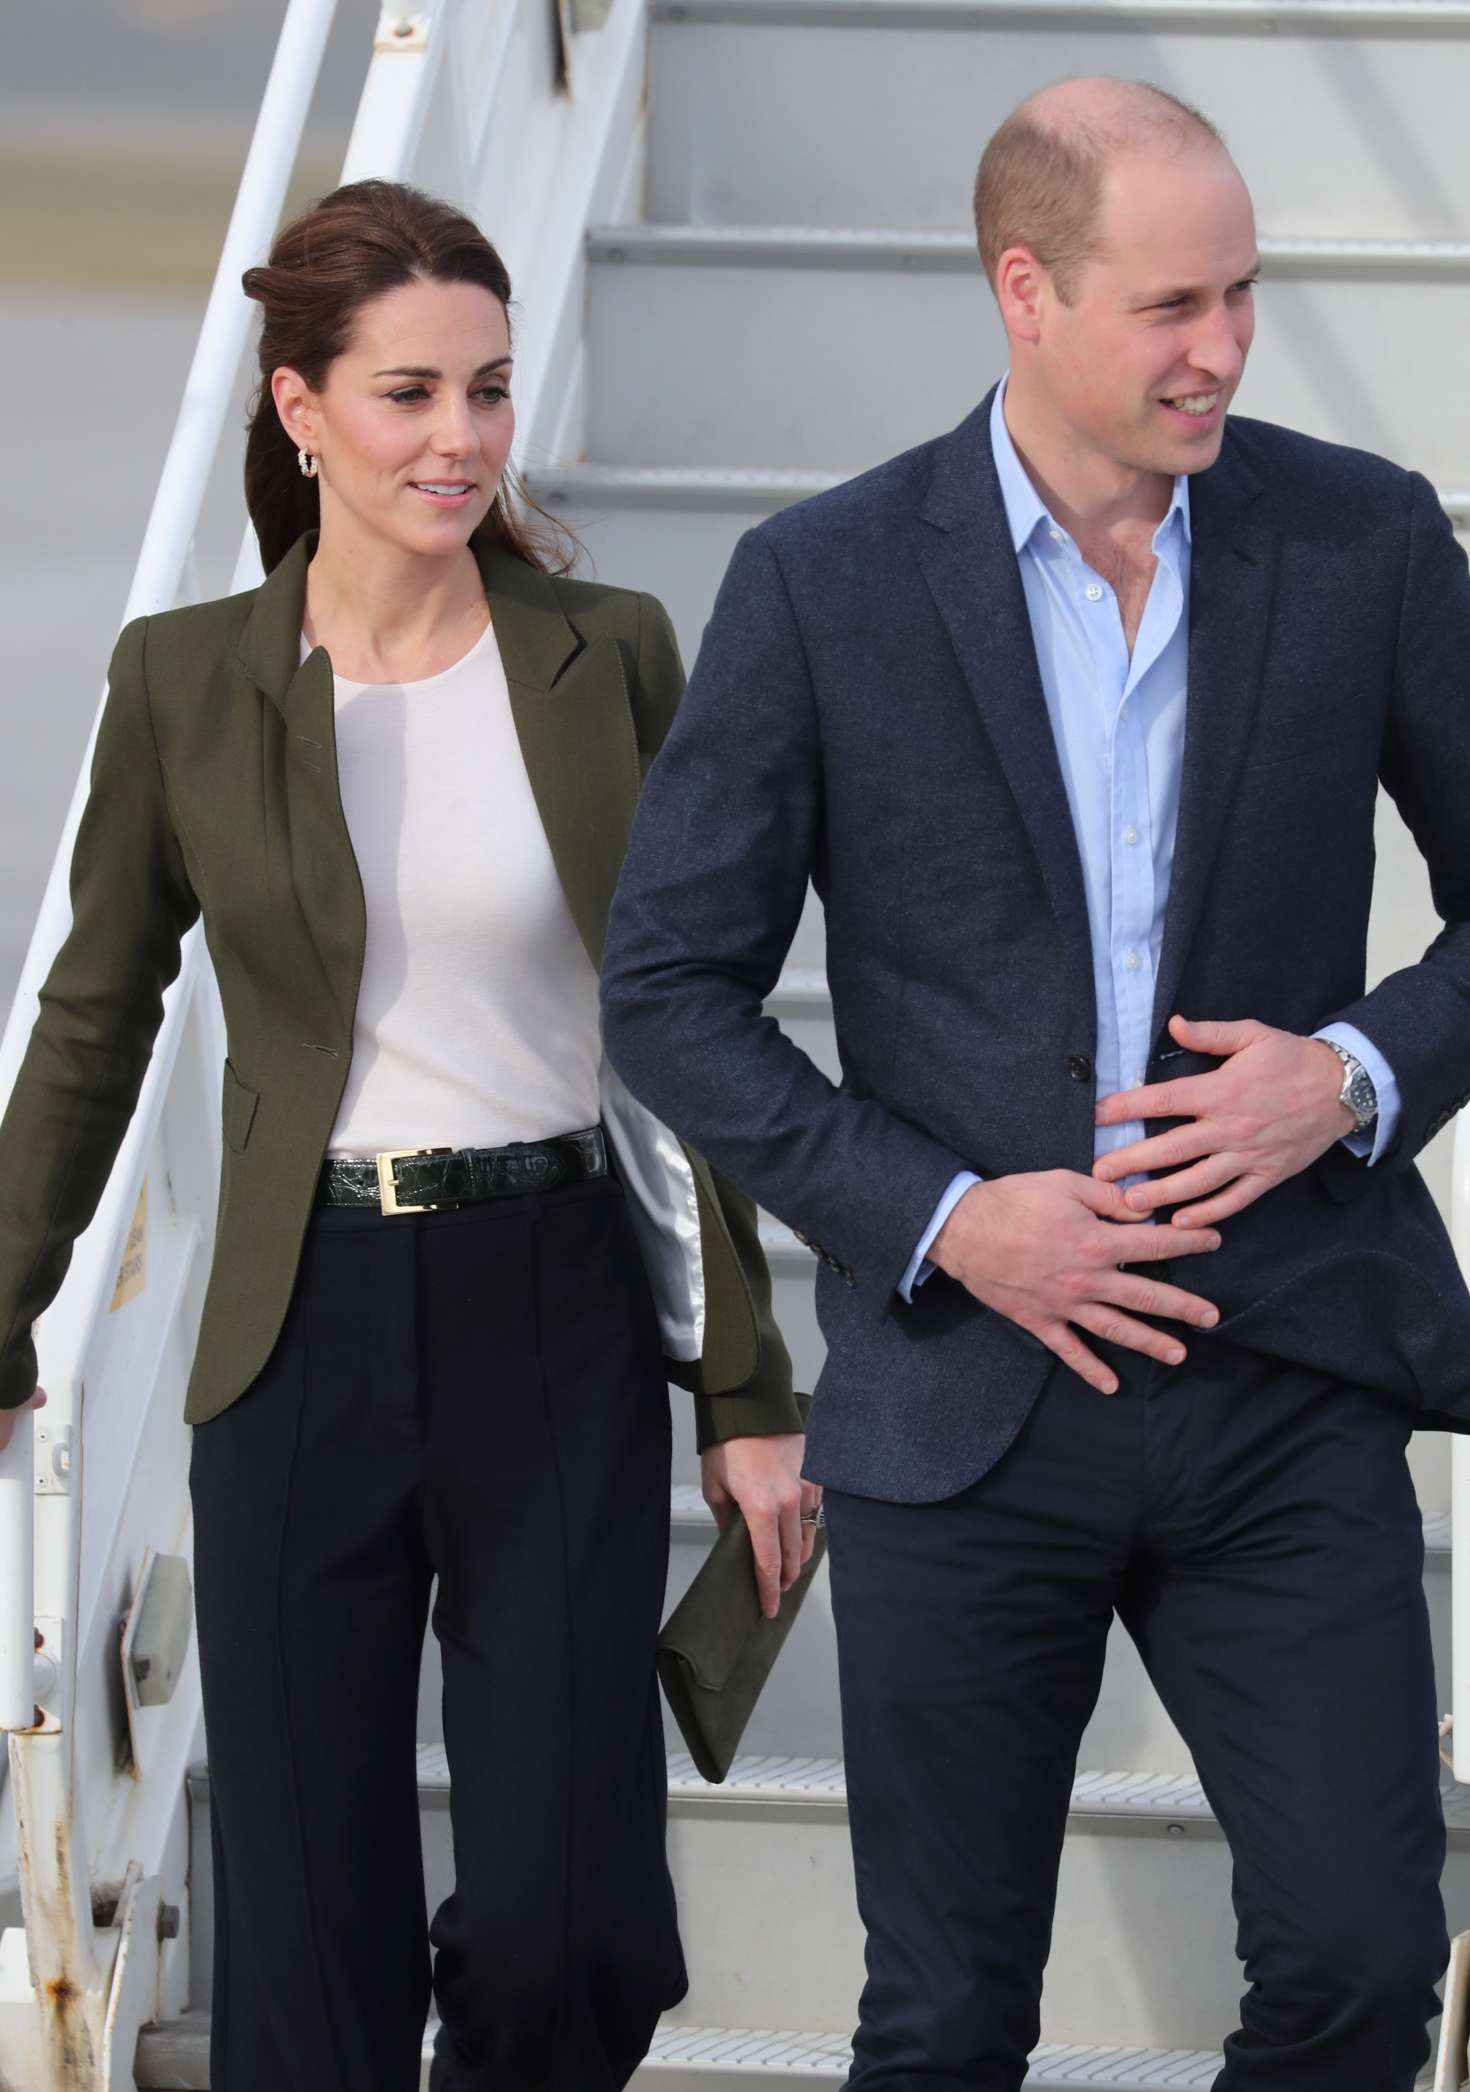 Kate Middleton â€“ Arrives at RAF Akrotiri in Akrotiri